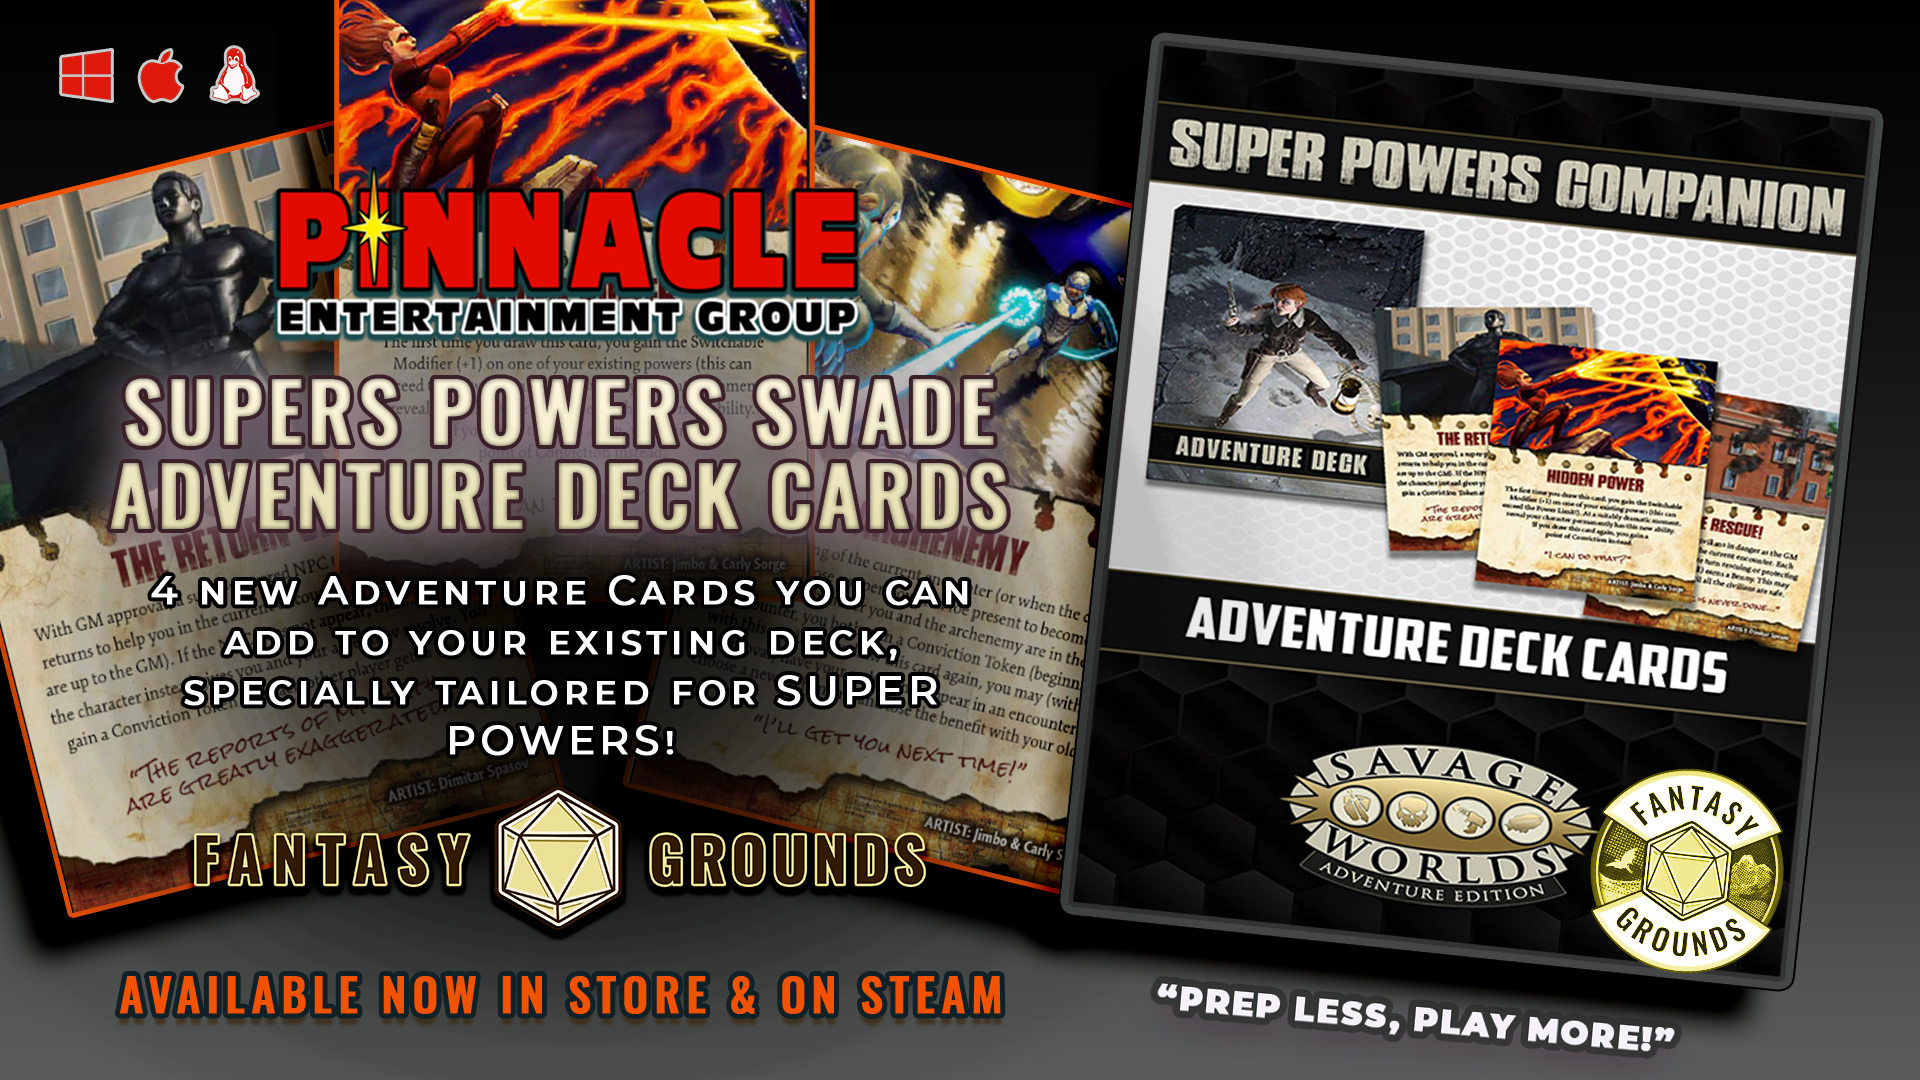 Supers Powers SWADE Adventure Deck Cards(S2P91151).jpg